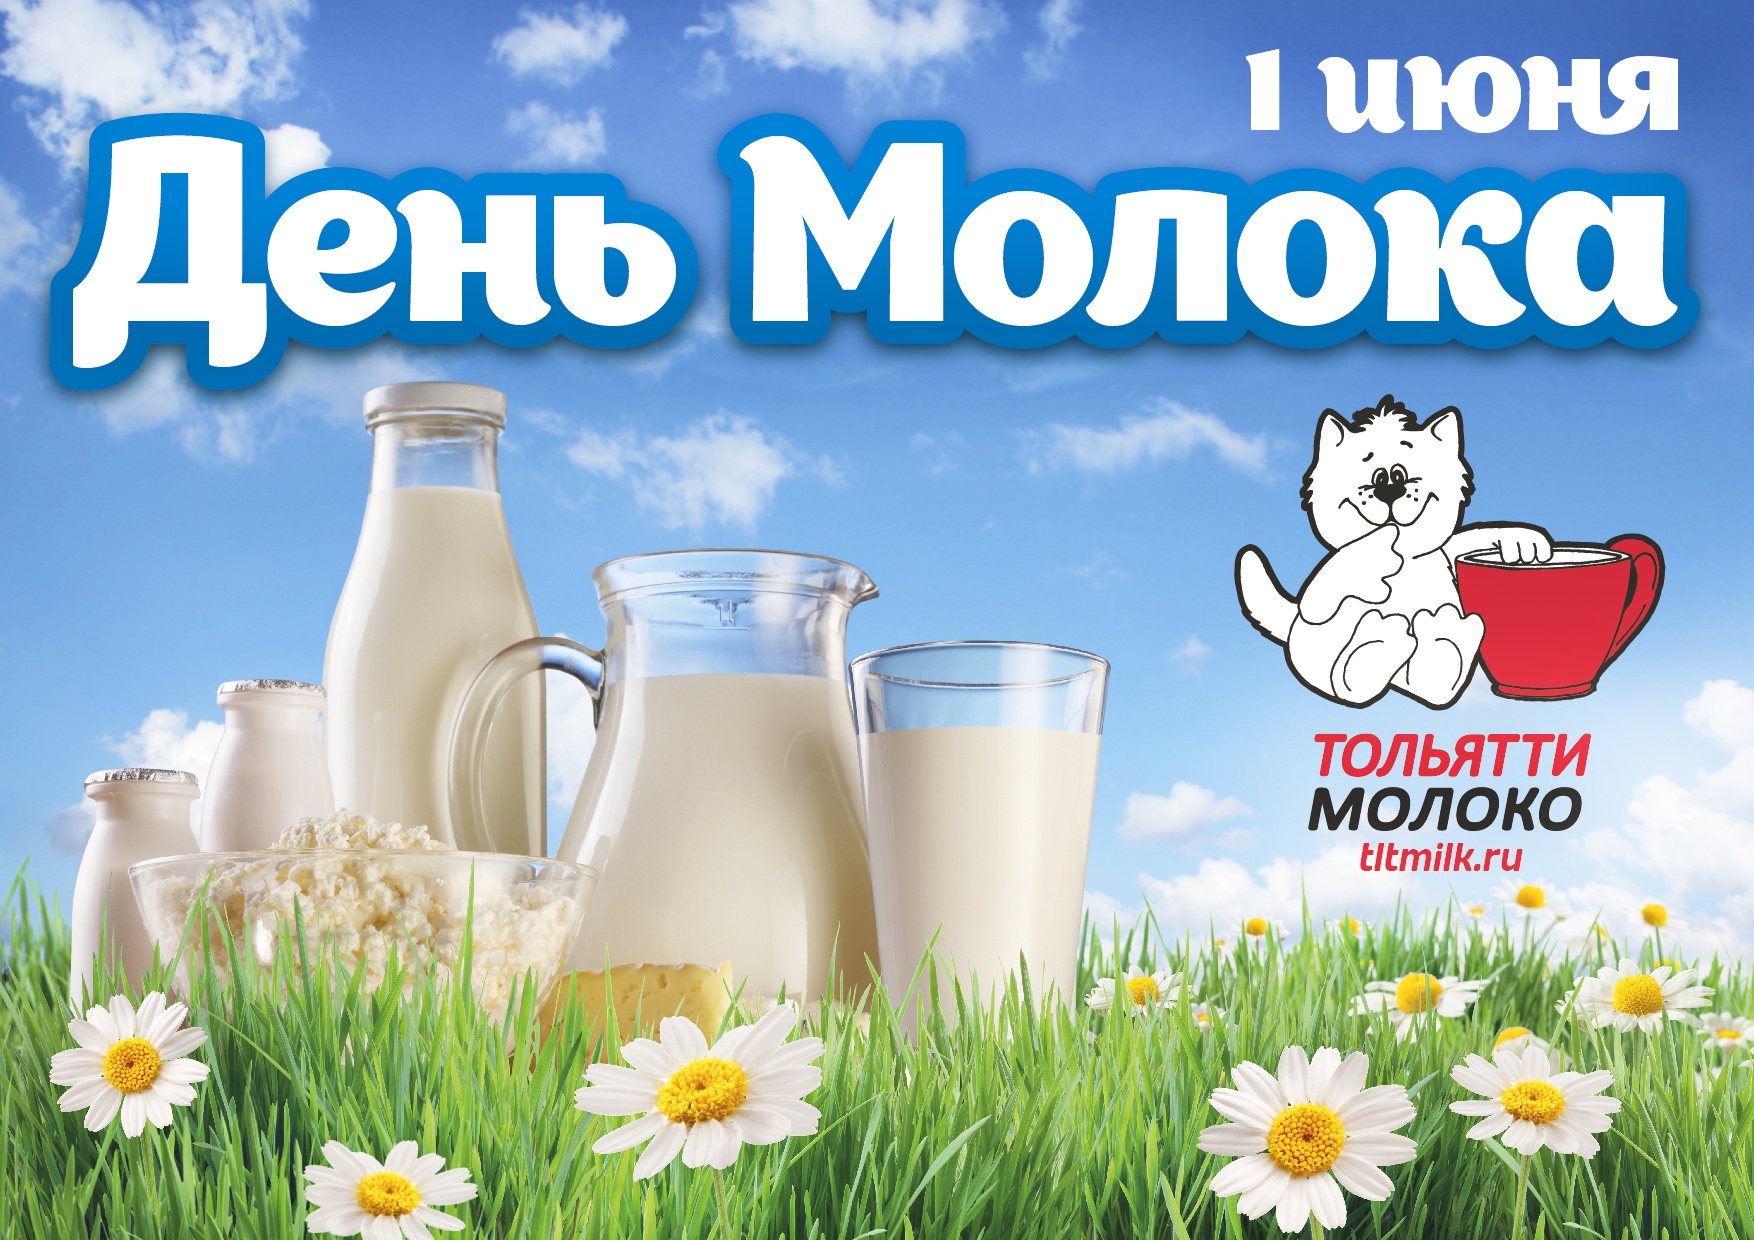 Молоко картинка. Летний день молоко. Молоко красивые картинки. День молока 11 января. Покажи картинку молока